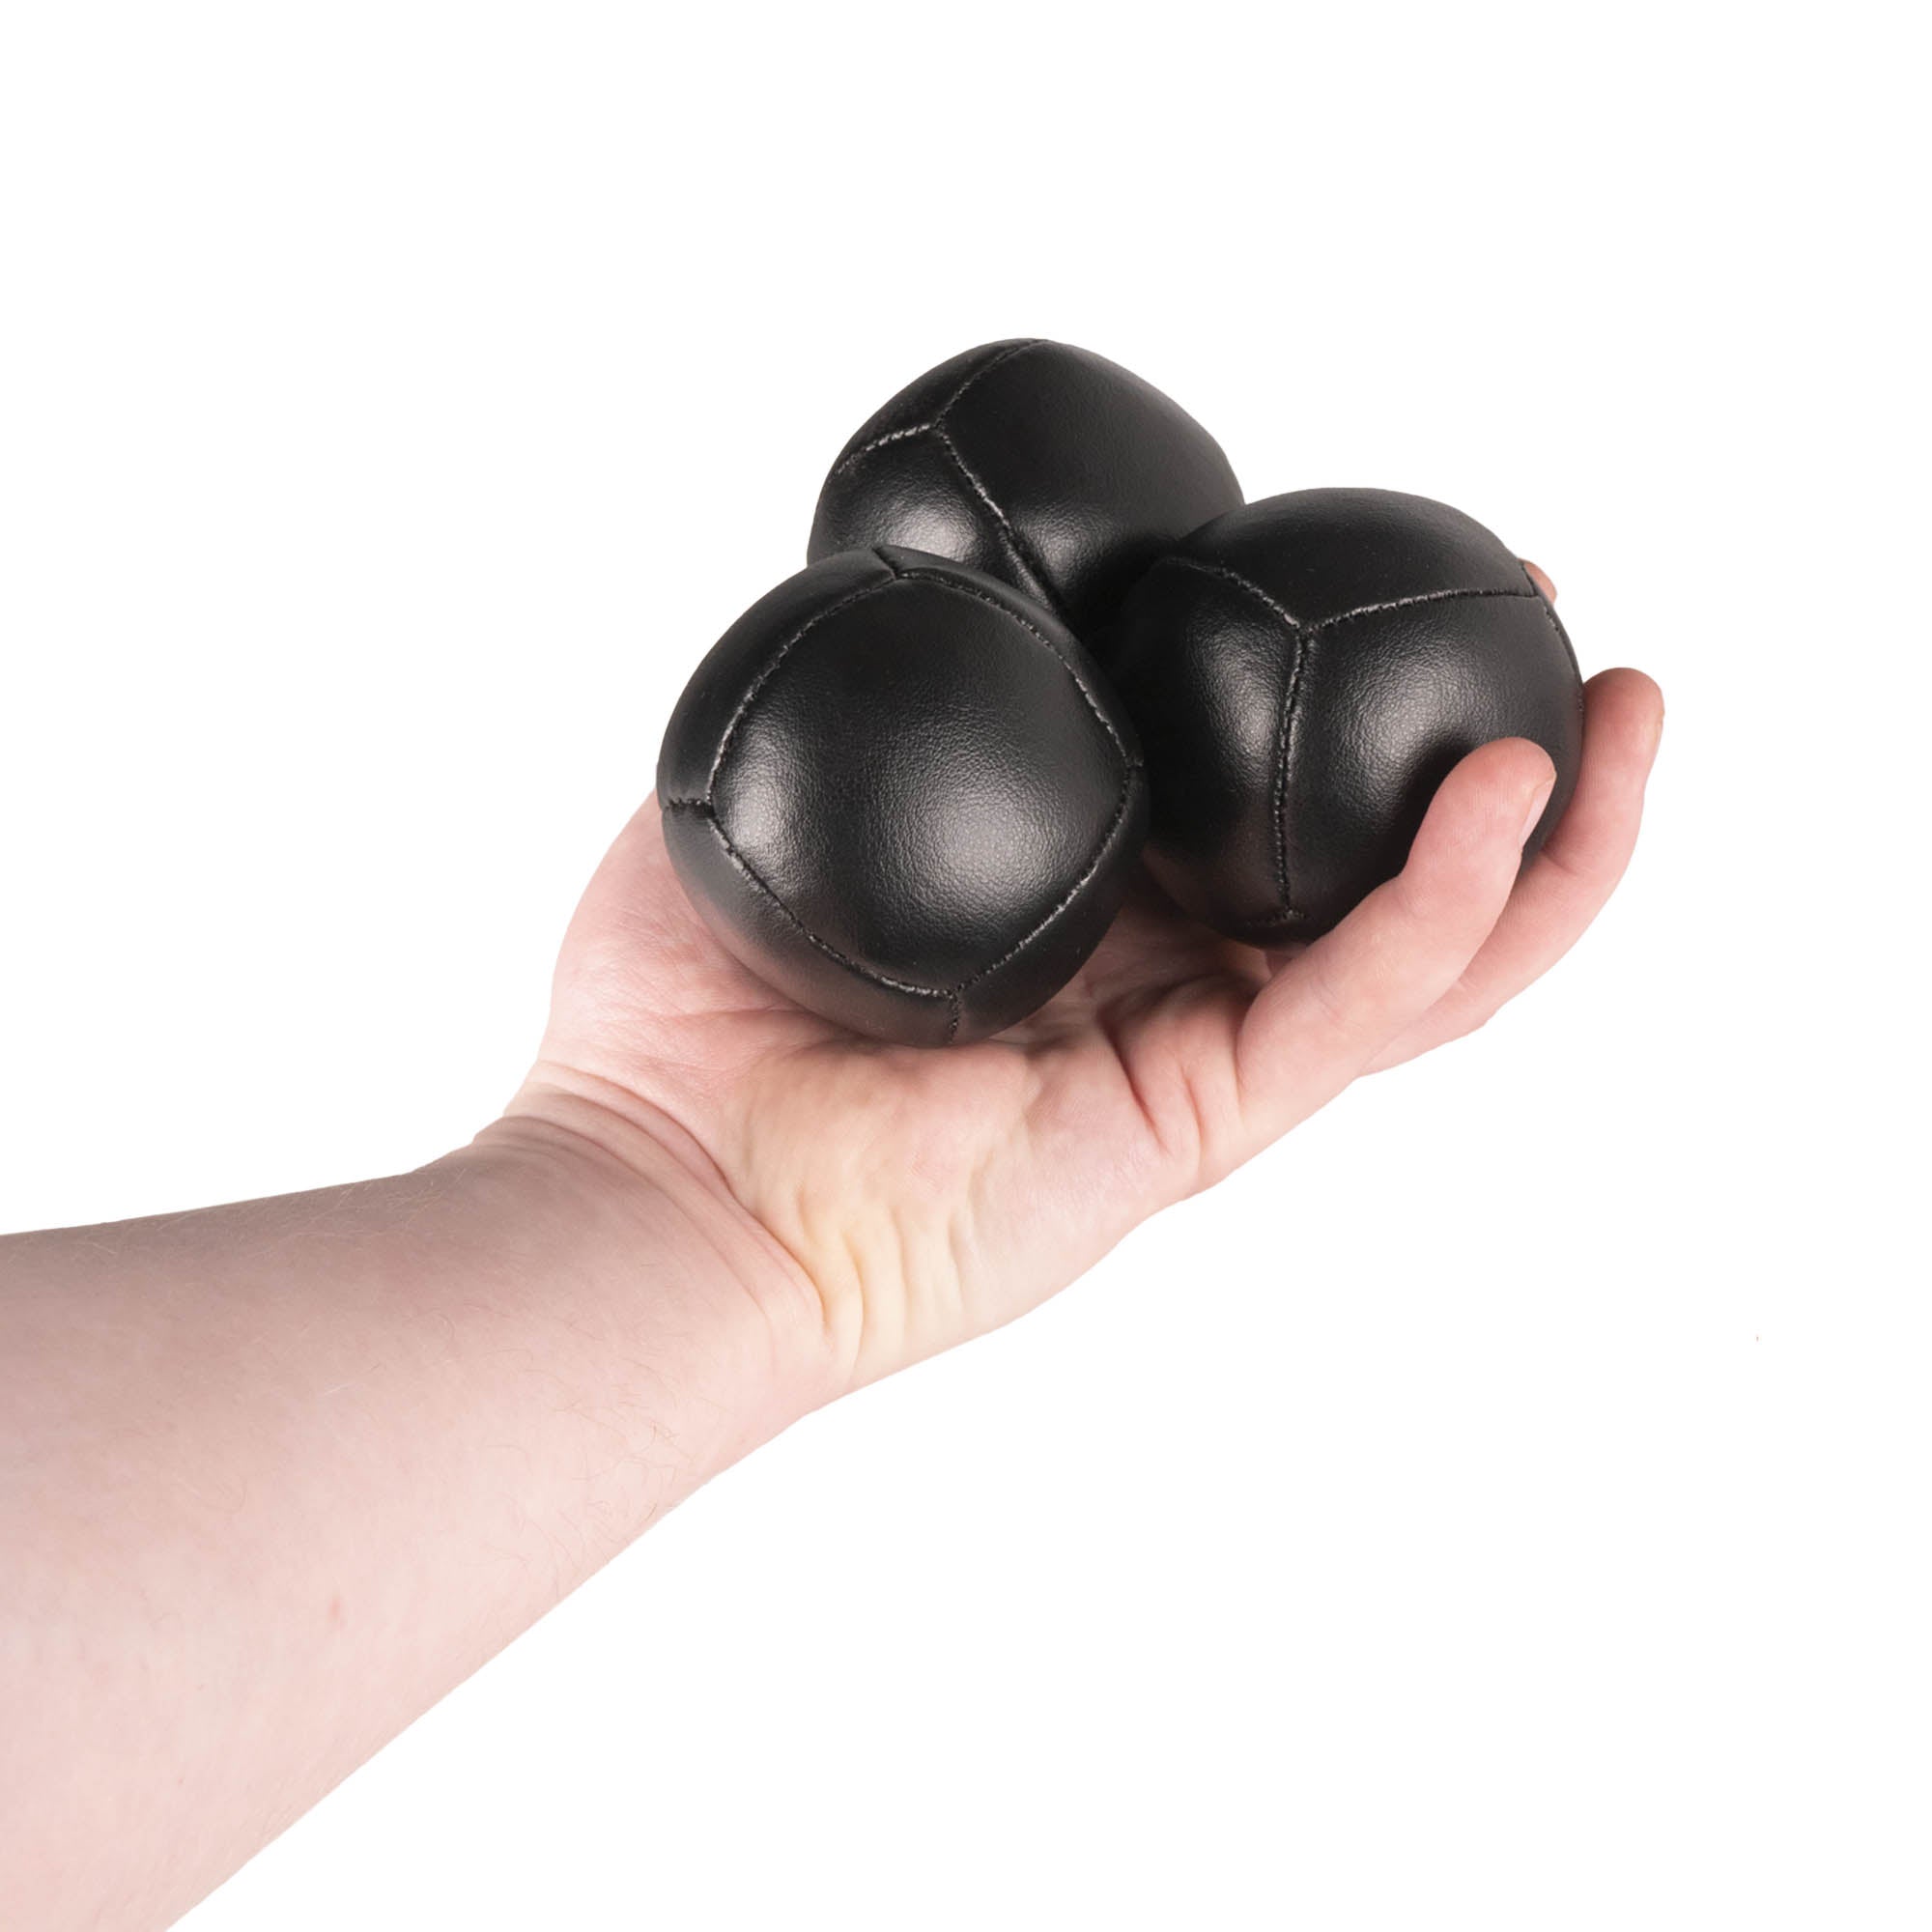 Firetoys three black 110g thud juggling balls in hand